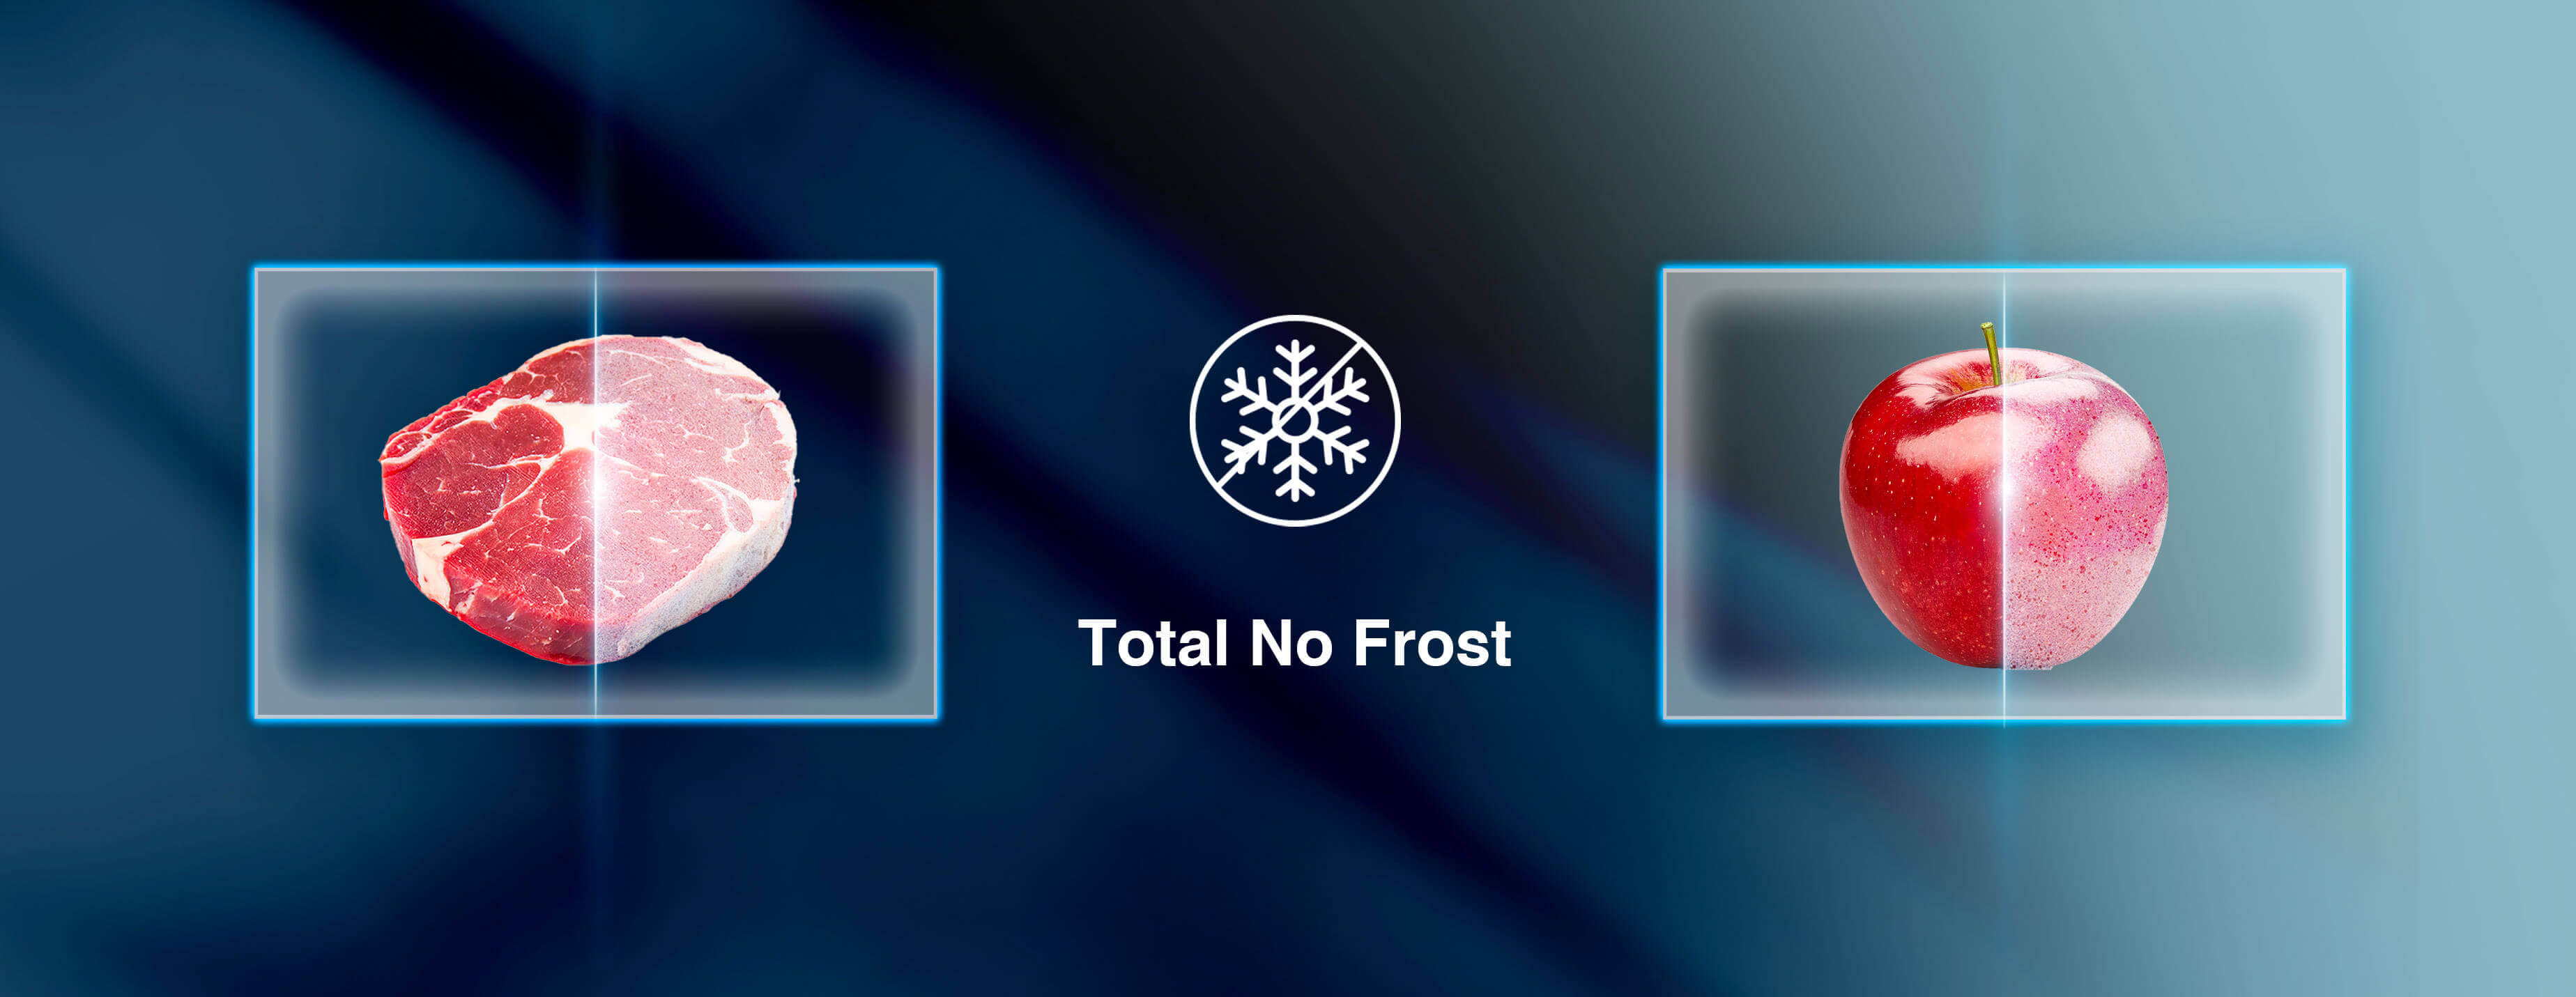 Total no frost tehnologija